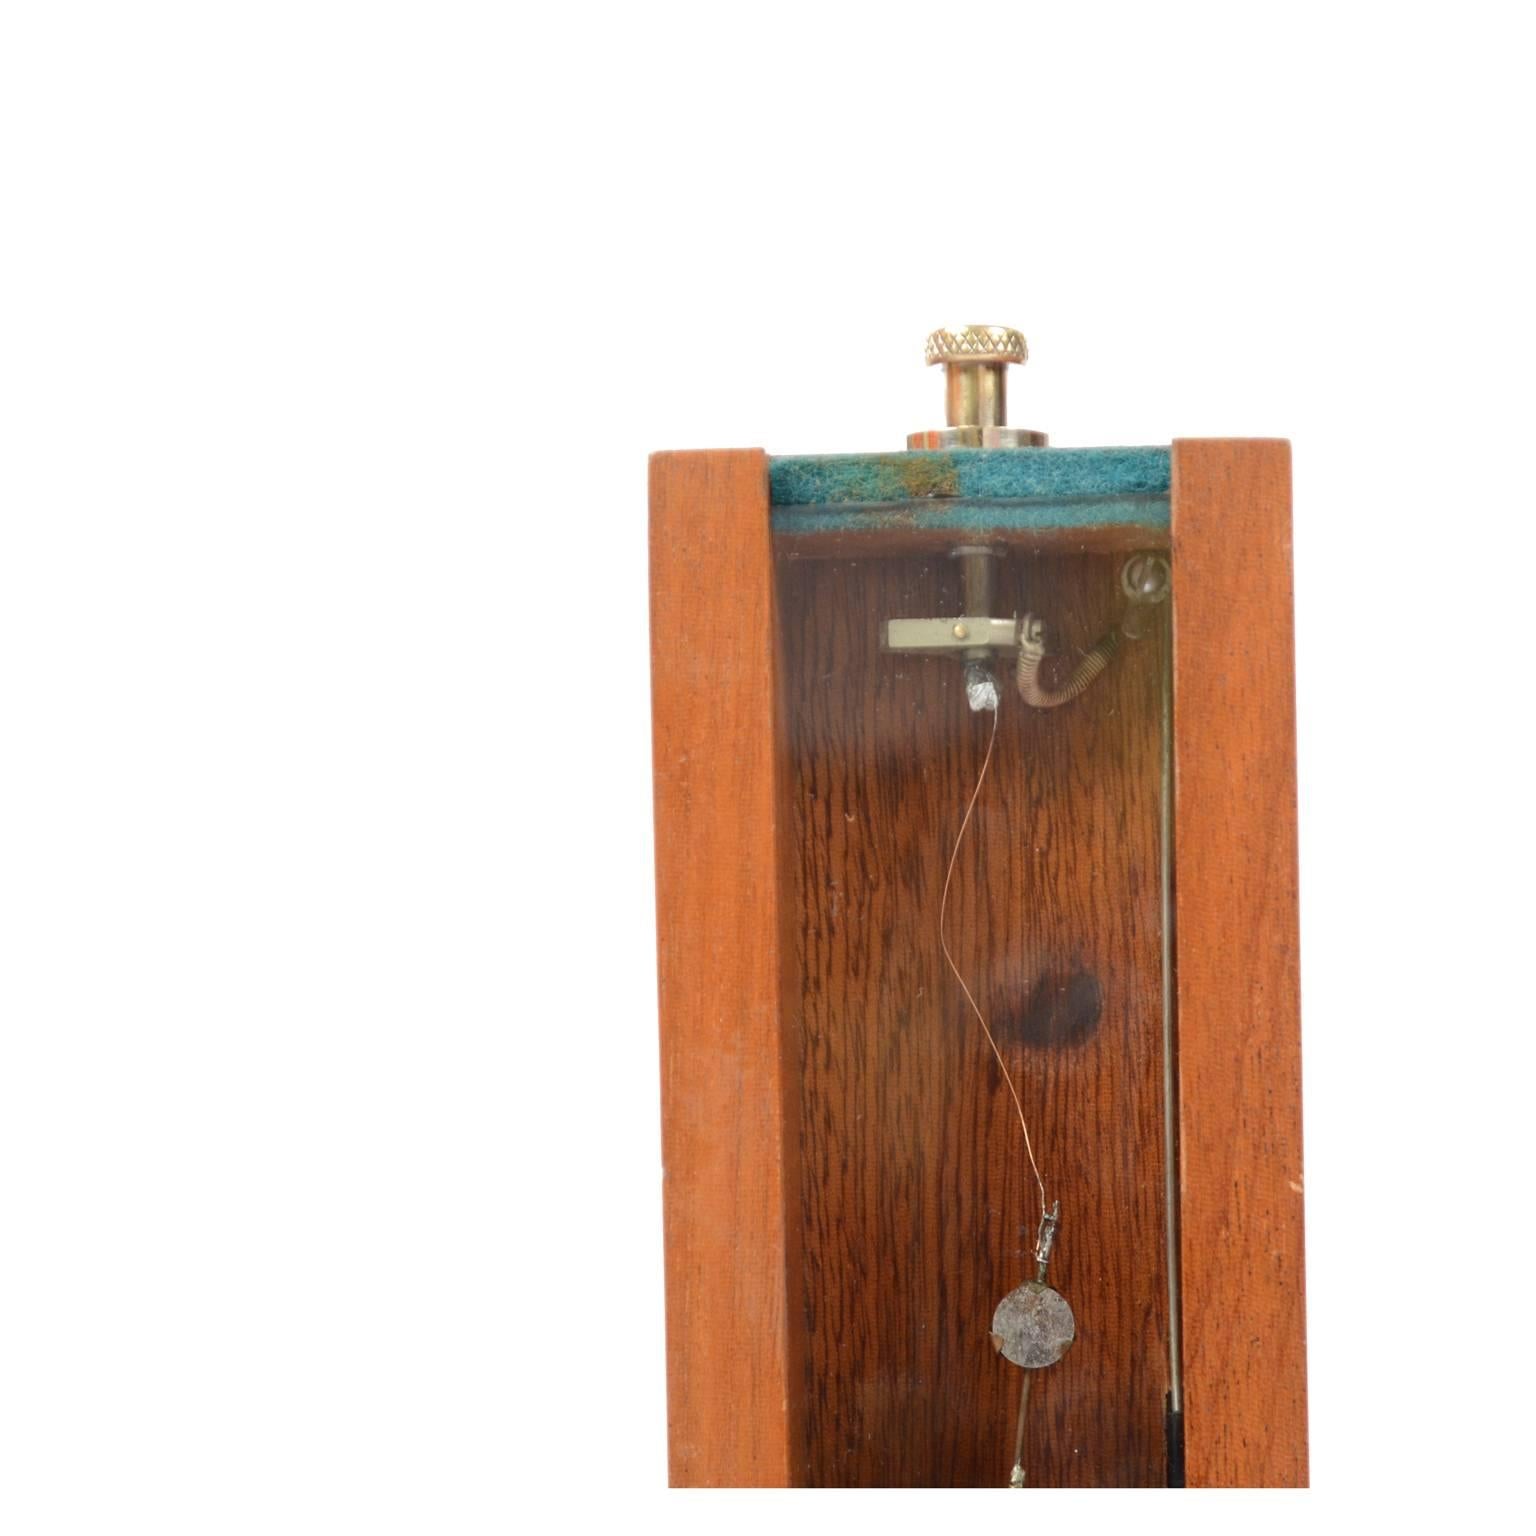 British Galvanometer Antique Measuring Instrument Used for Telegraph Cables 1850 circa For Sale